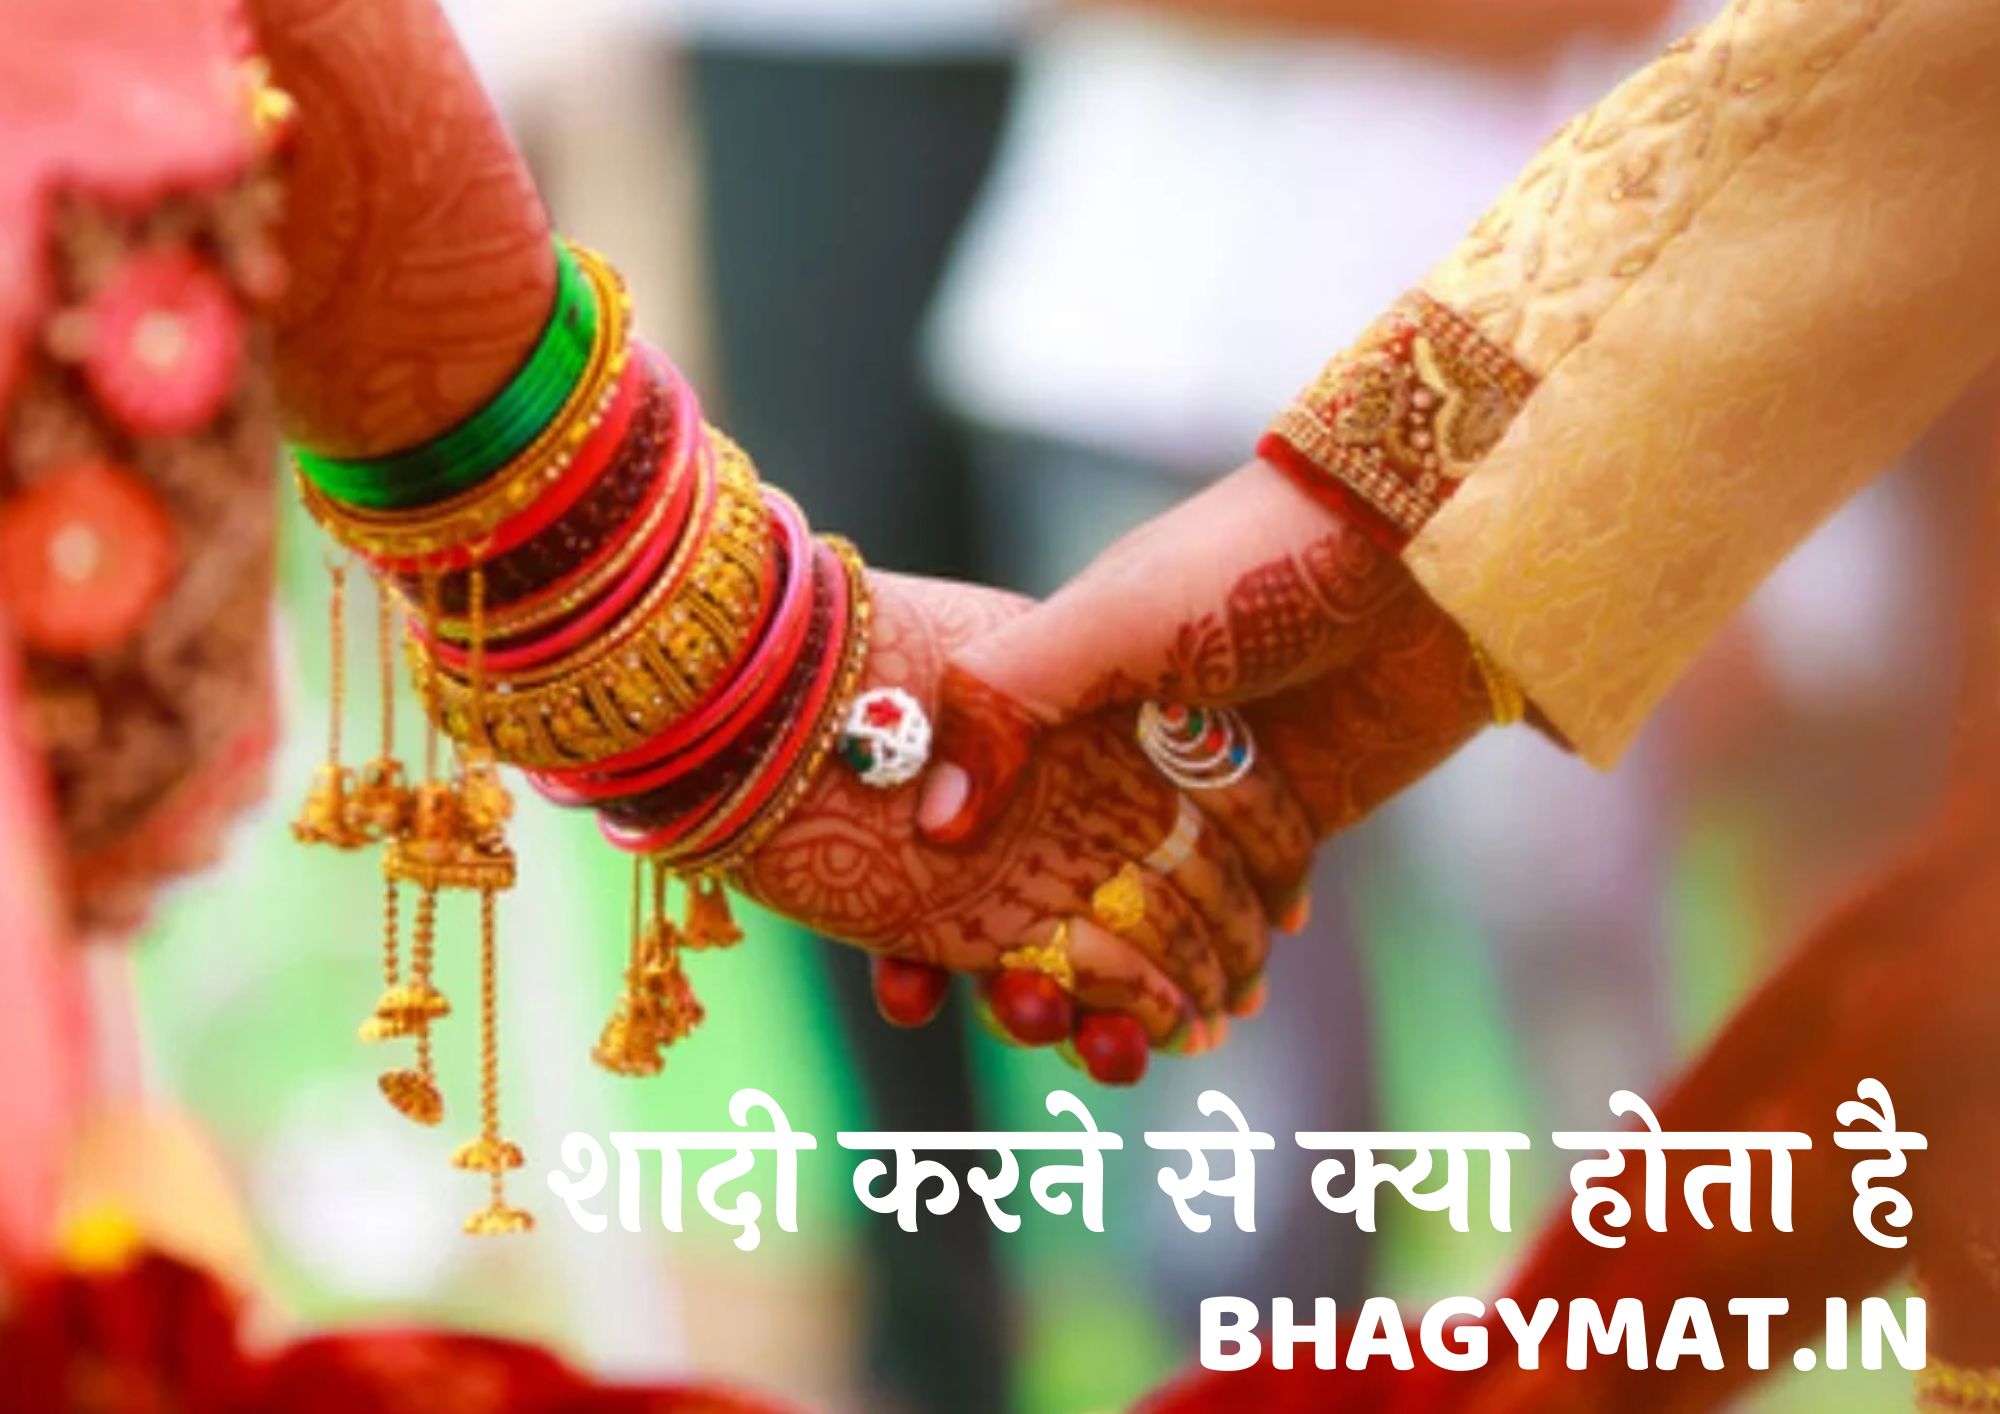 शादी करने से क्या होता है (Shadhi Karne Se Kya Hota Hai In Hindi)